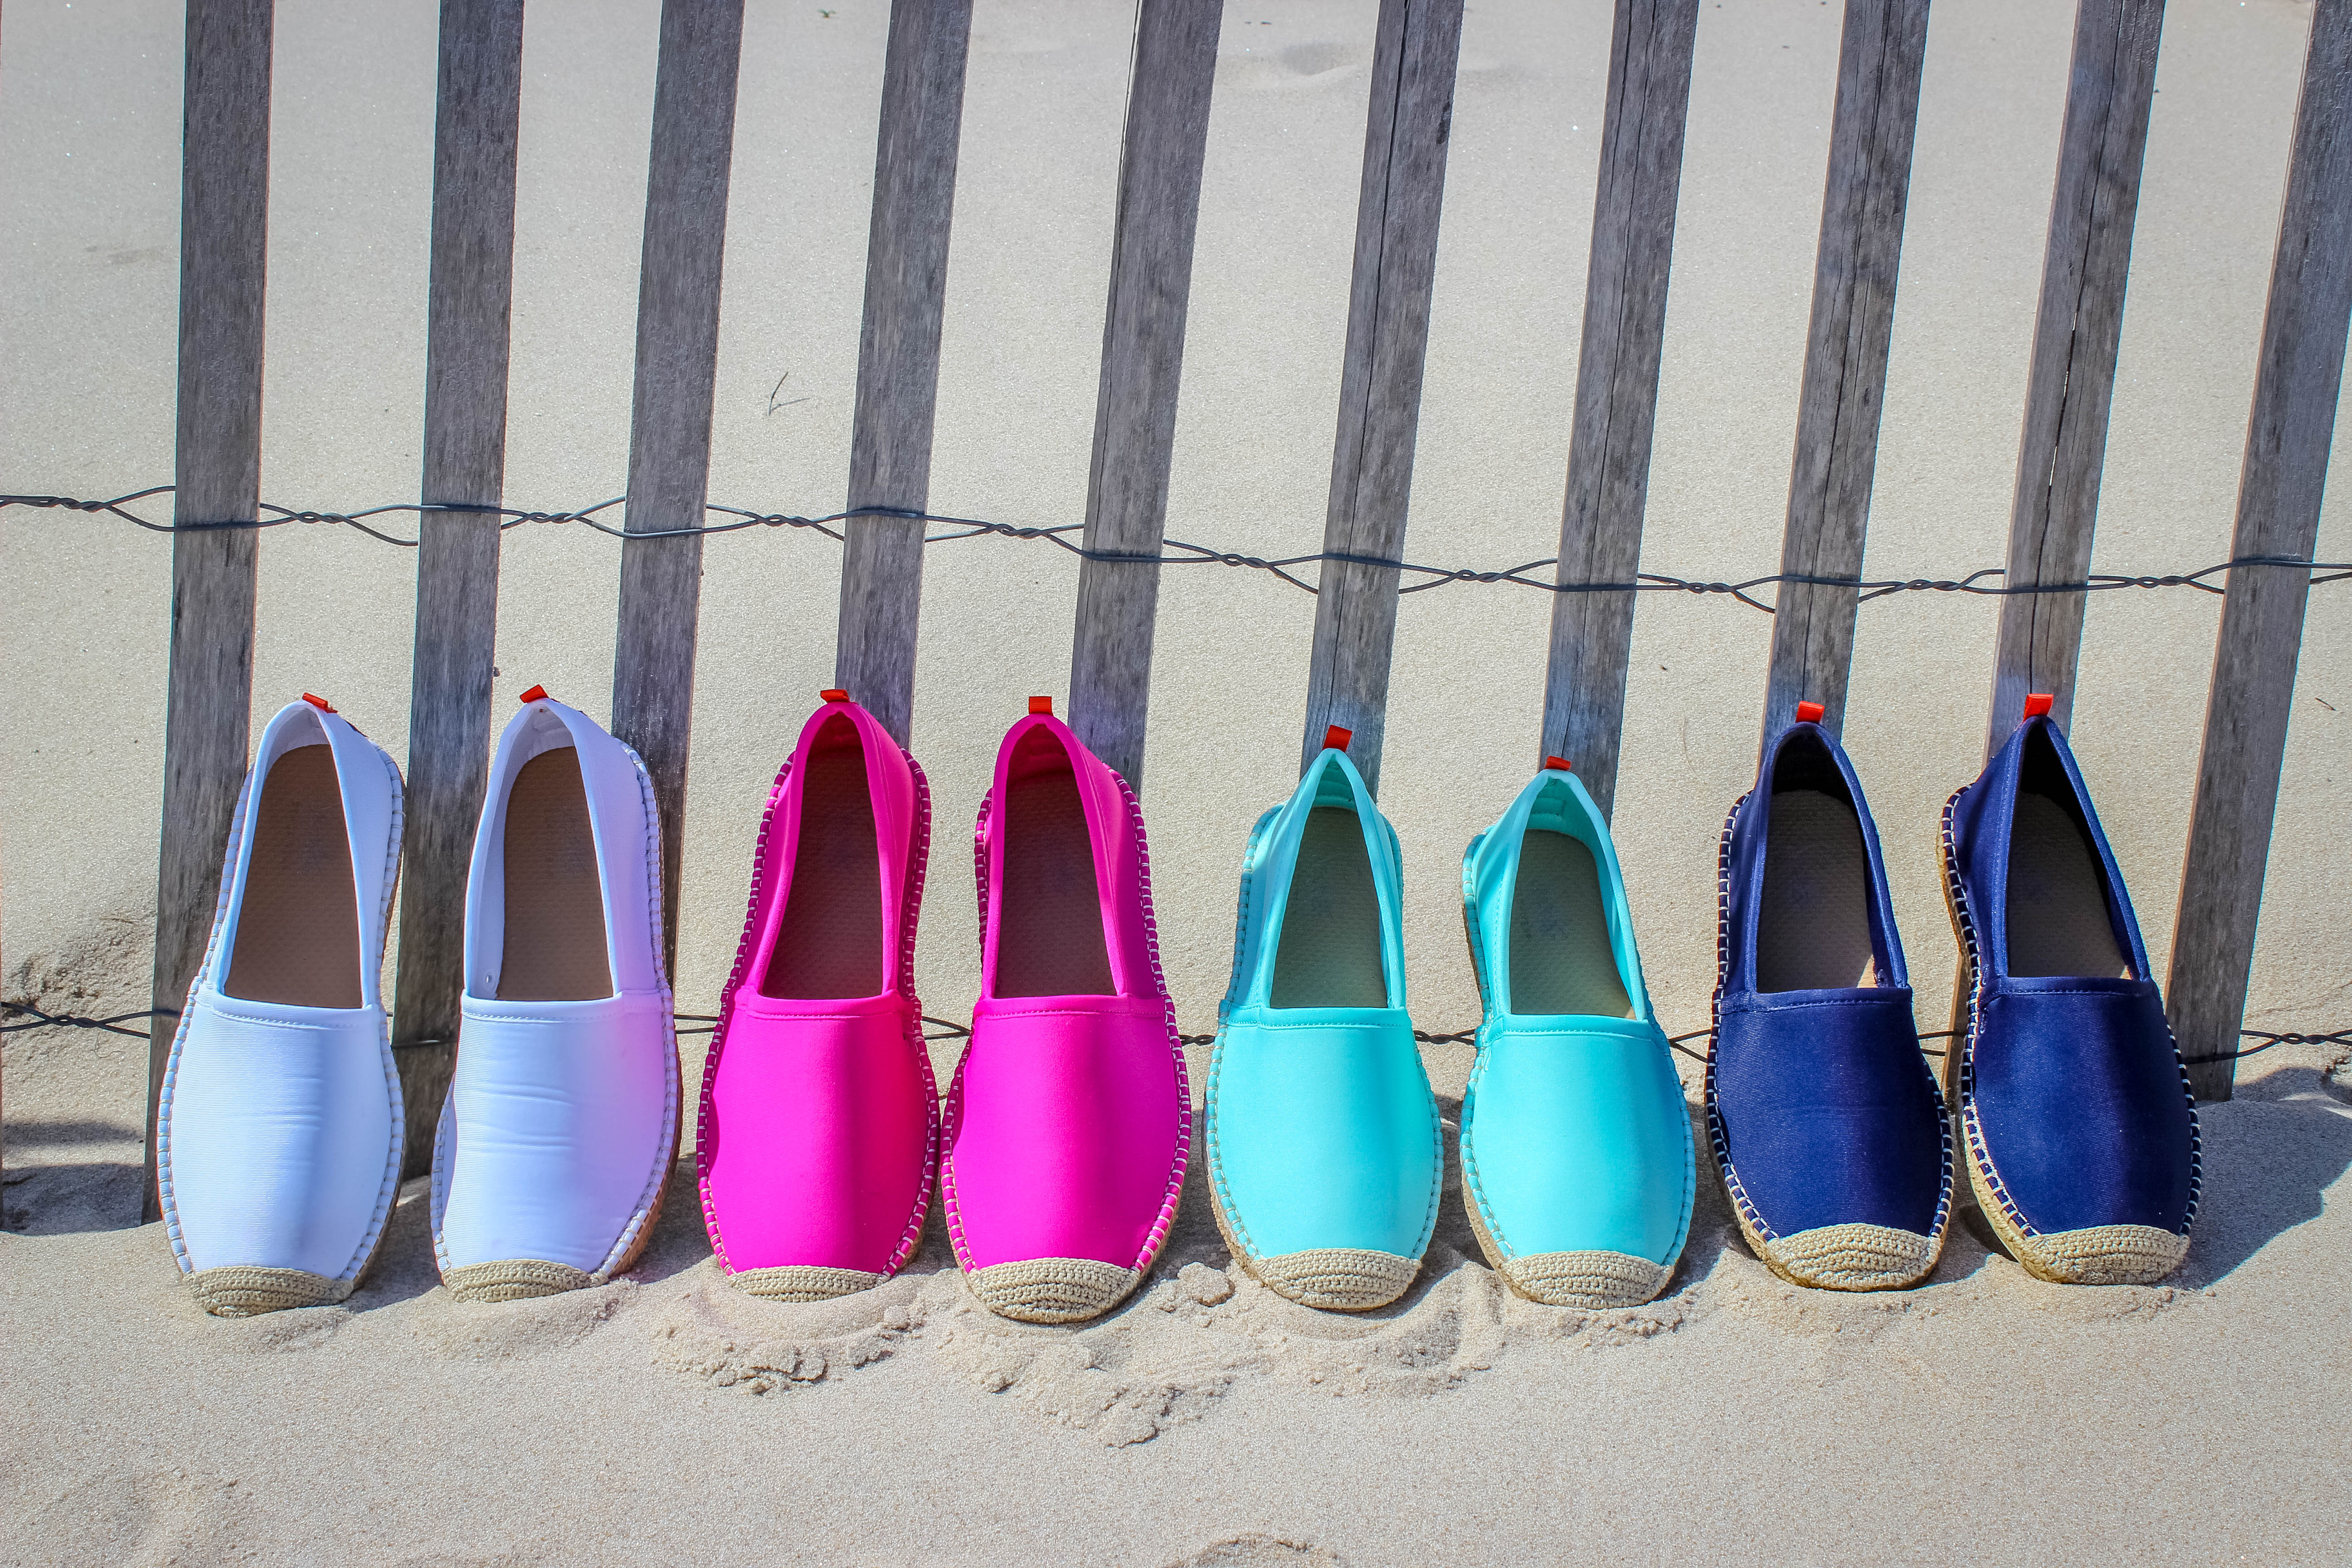 beachcomber espadrille water shoes